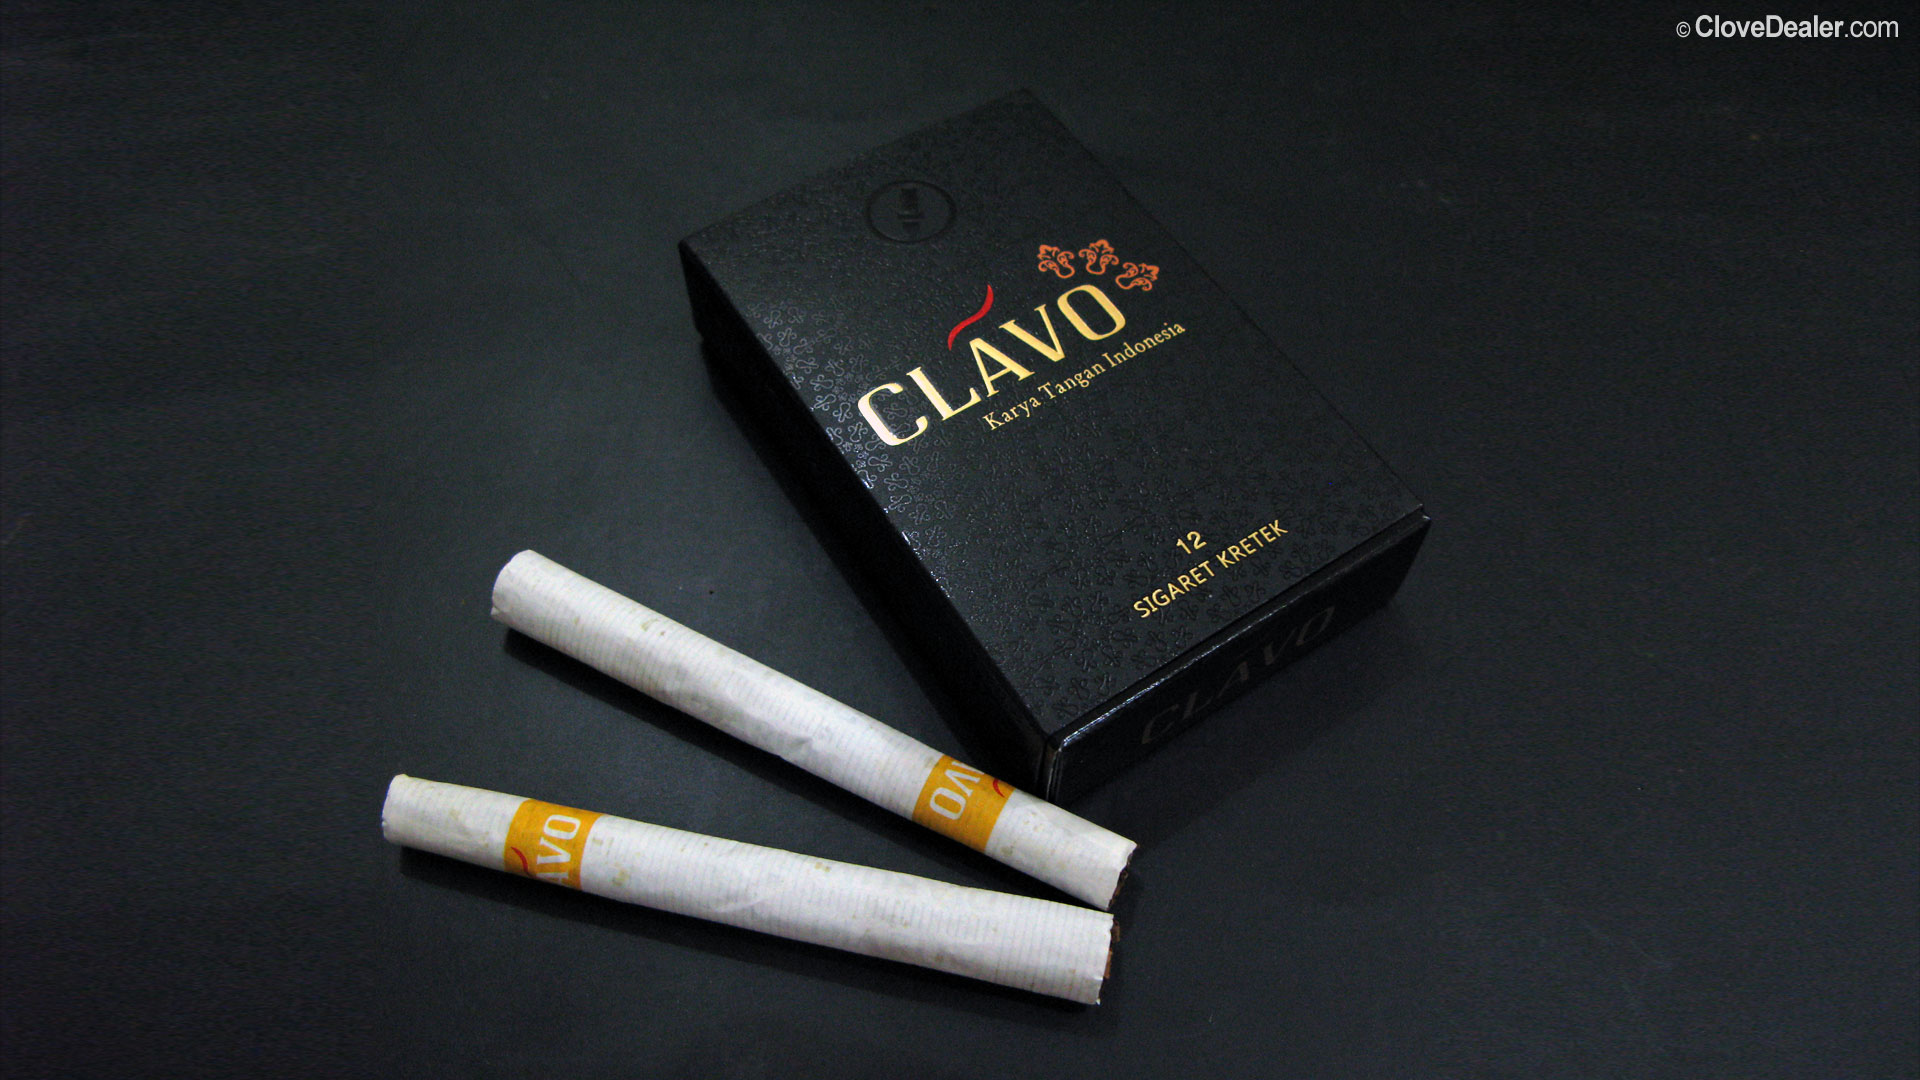 Cigarette Wallpaper Tumblr Clavo smoking wallpapers 1920x1080